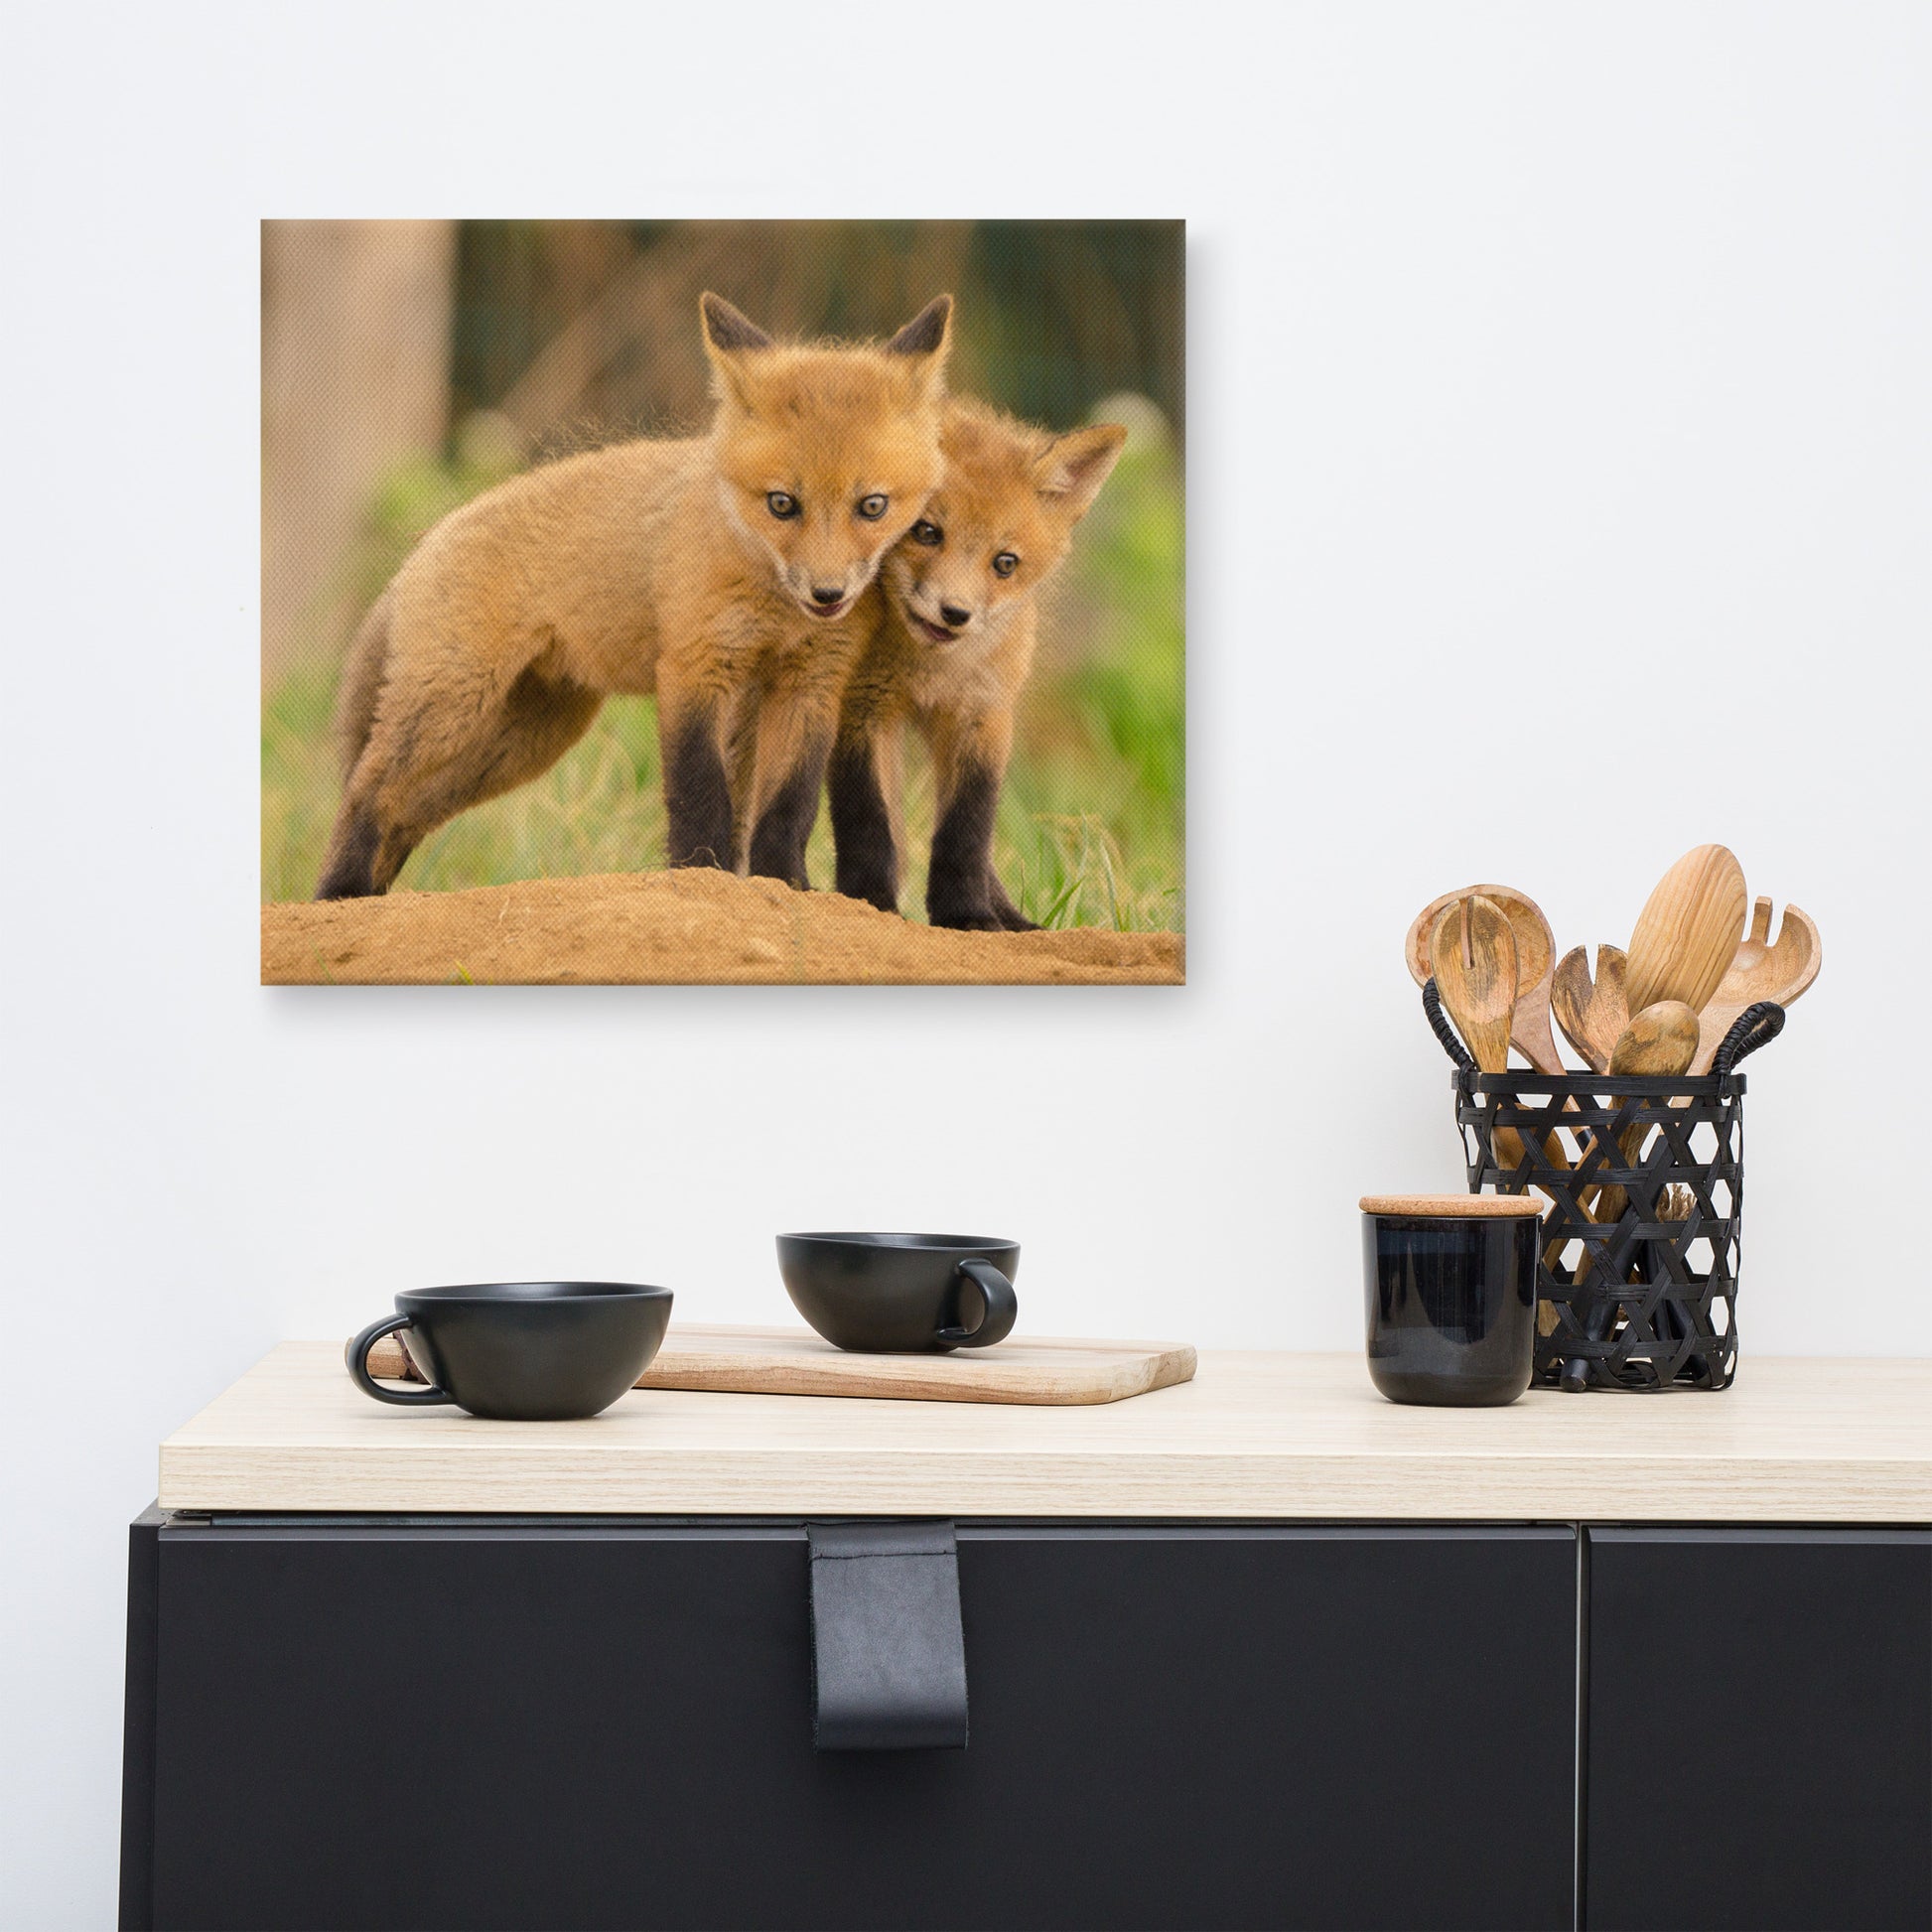 Cozy Bedroom Art: Close to You Baby Fox Pups - Animal / Wildlife / Nature Photograph Wall Art Print- Artwork - Wall Decor